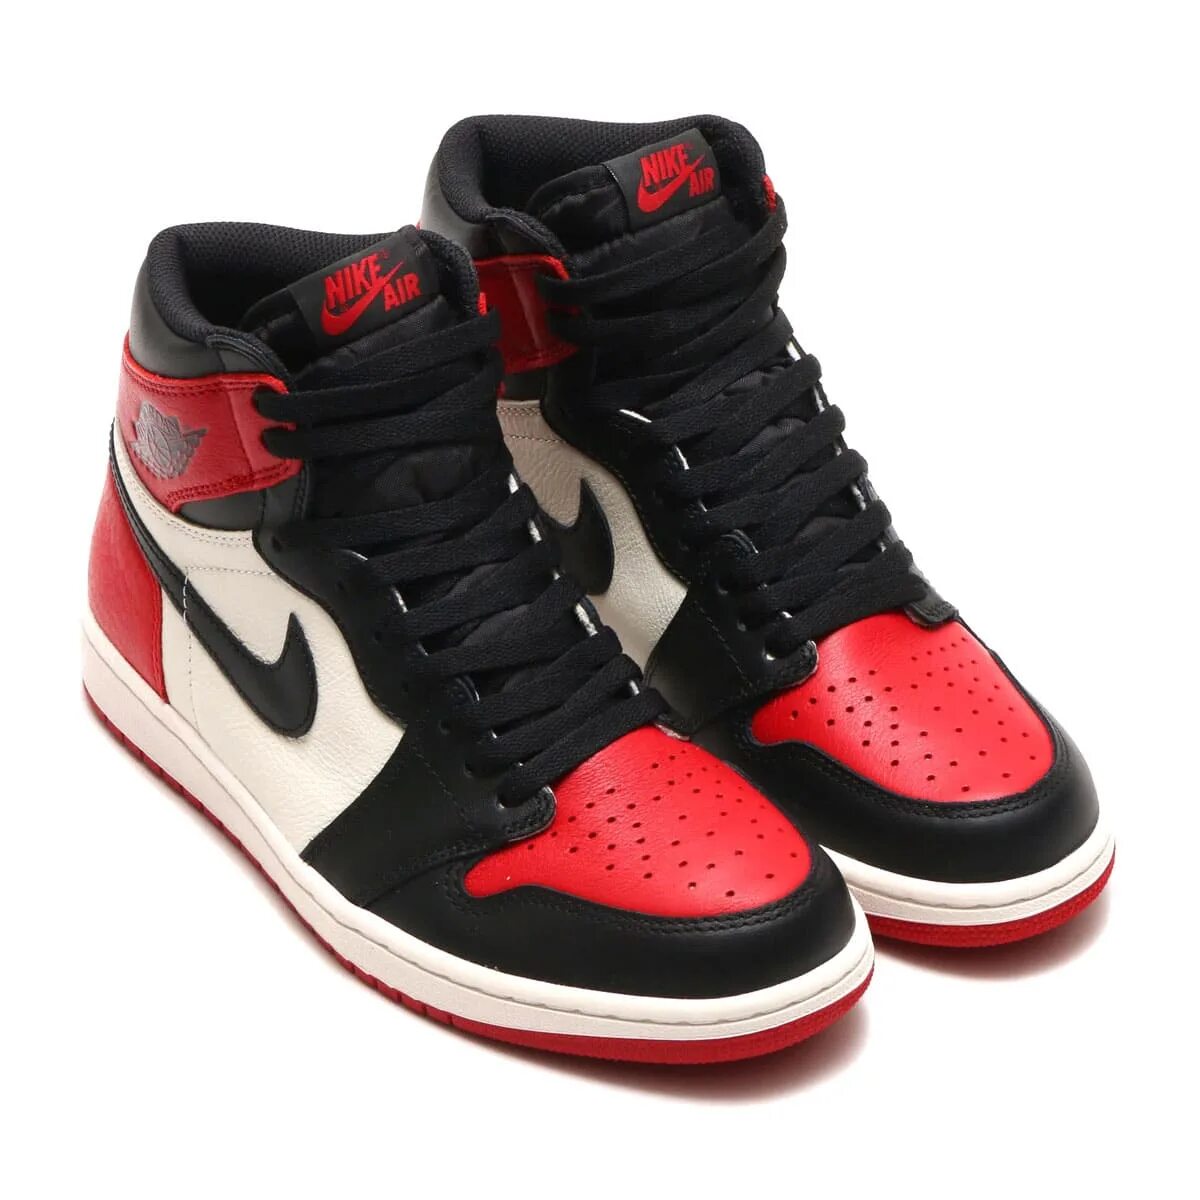 Nike Air Jordan 1 Black Red. Nike Air Jordan 1 Red. Nike Air Jordan 1 High. Nike Air Jordan 1 Retro High og. Кроссовки jordan черные